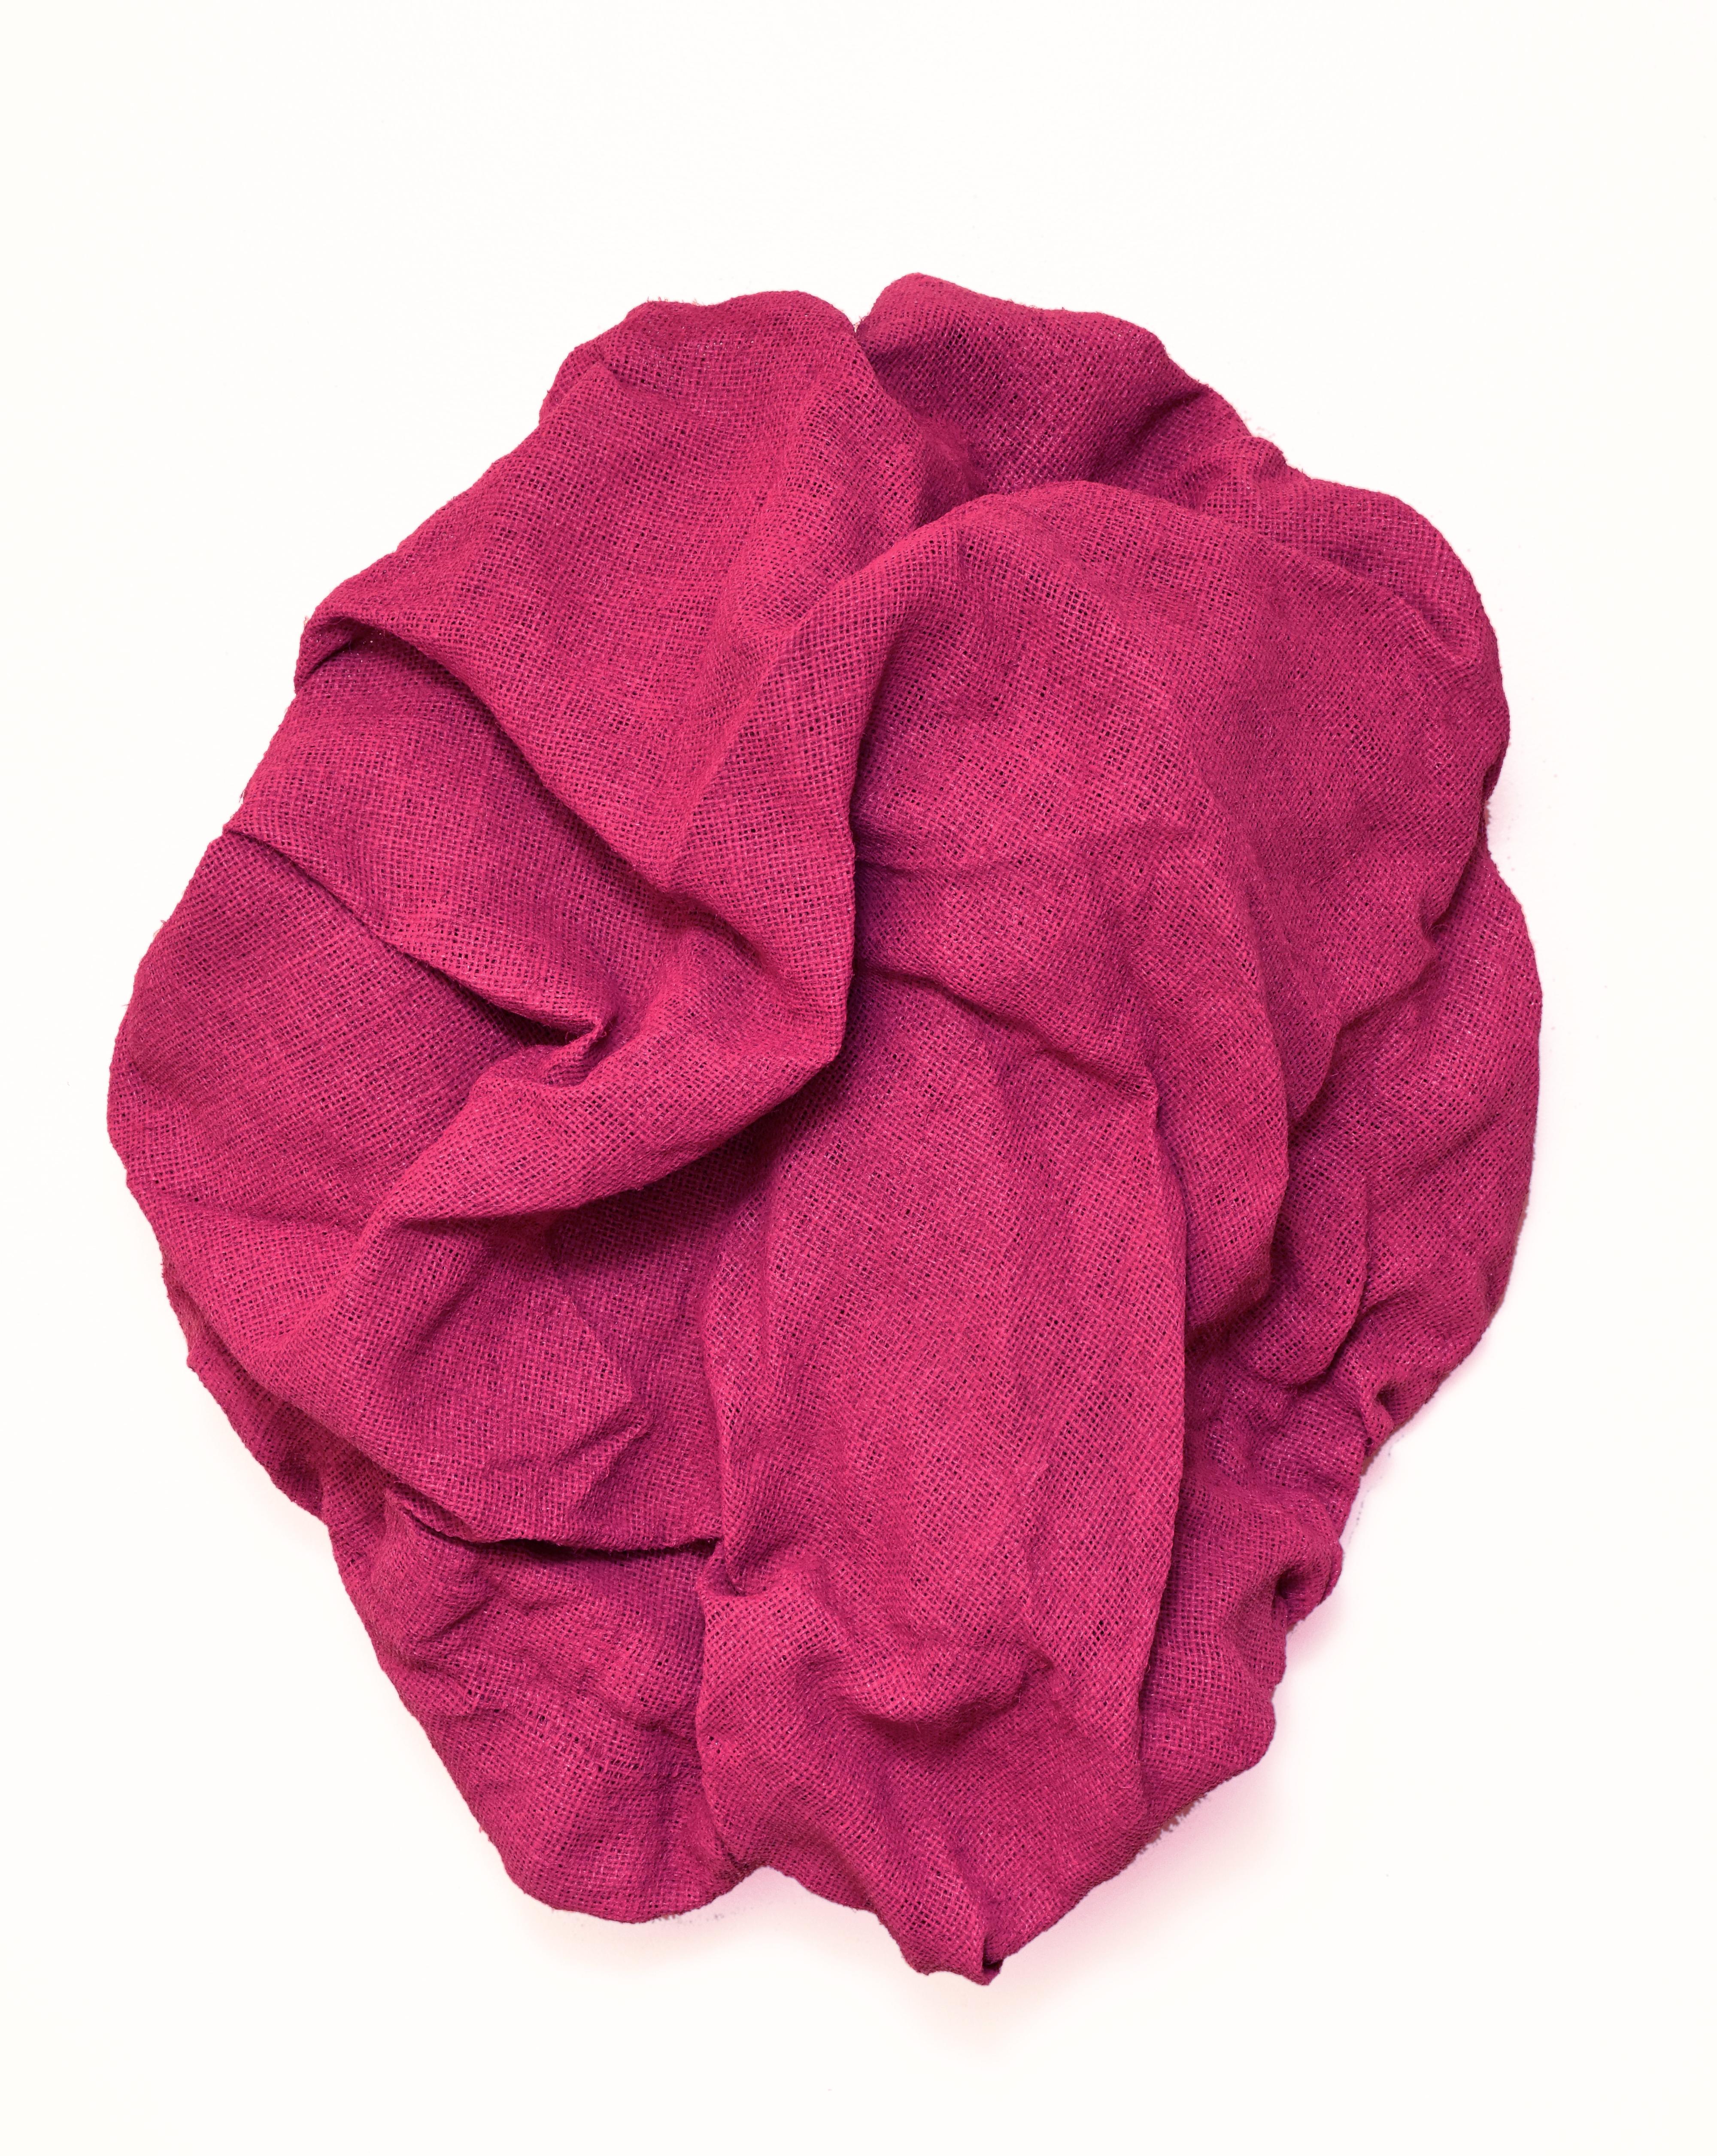 Abstract Sculpture Chloe Hedden - Sculpture murale «ambo Pink Folds » en tissu, monochrome, chaude, mcm